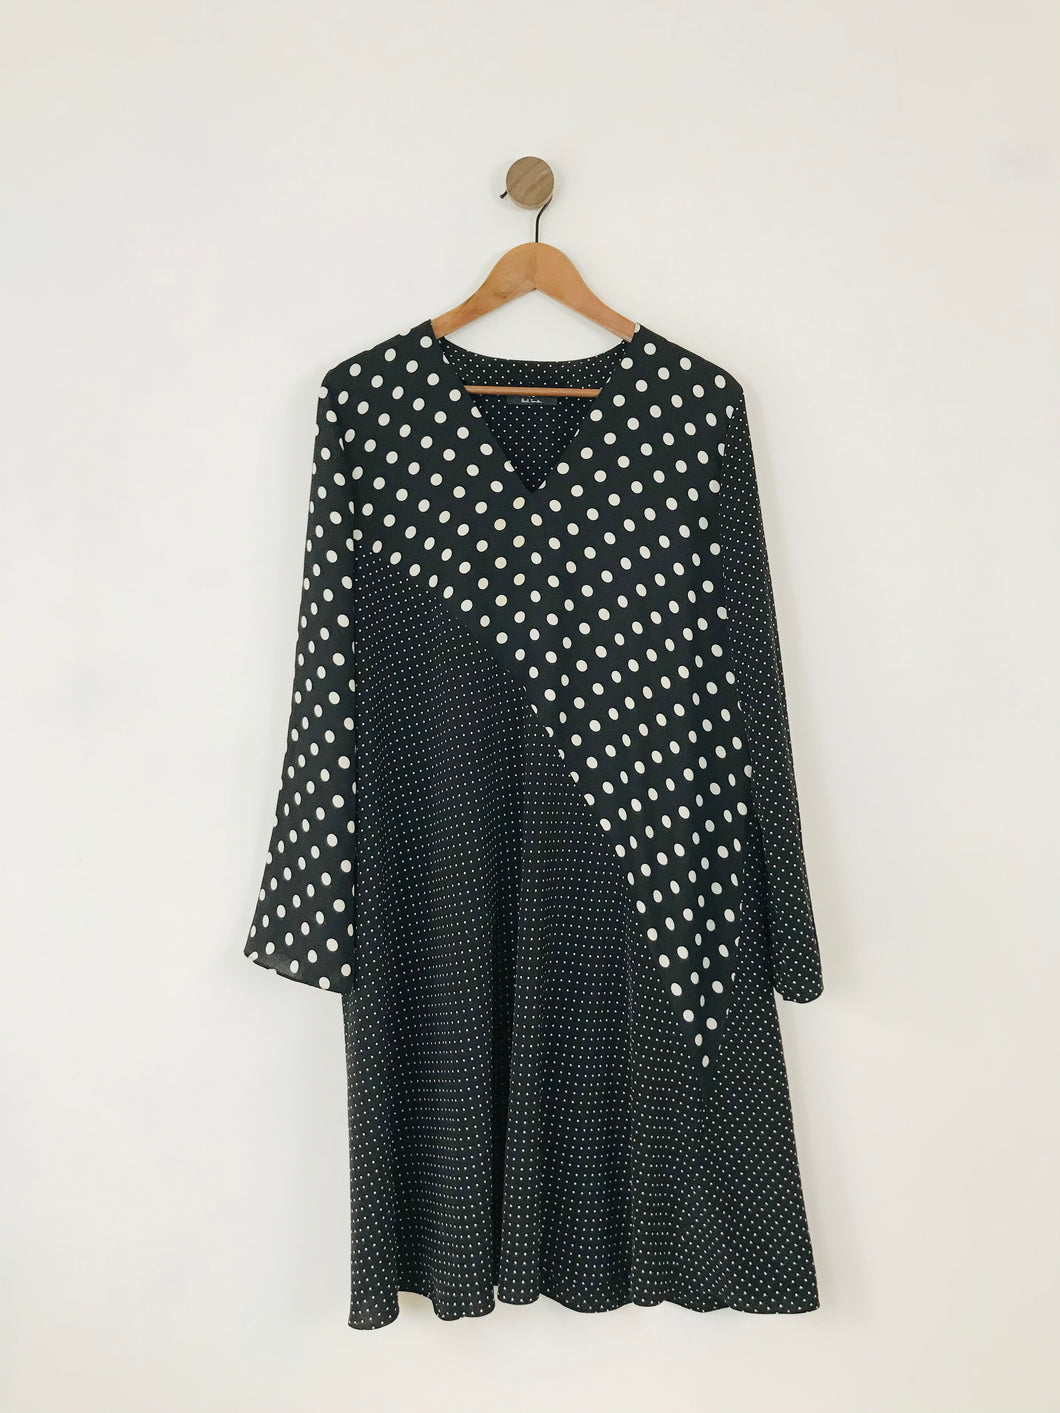 Paul Smith Women’s Long Sleeve Contrast Polka Dot Shift Dress | 46 UK14 | Black